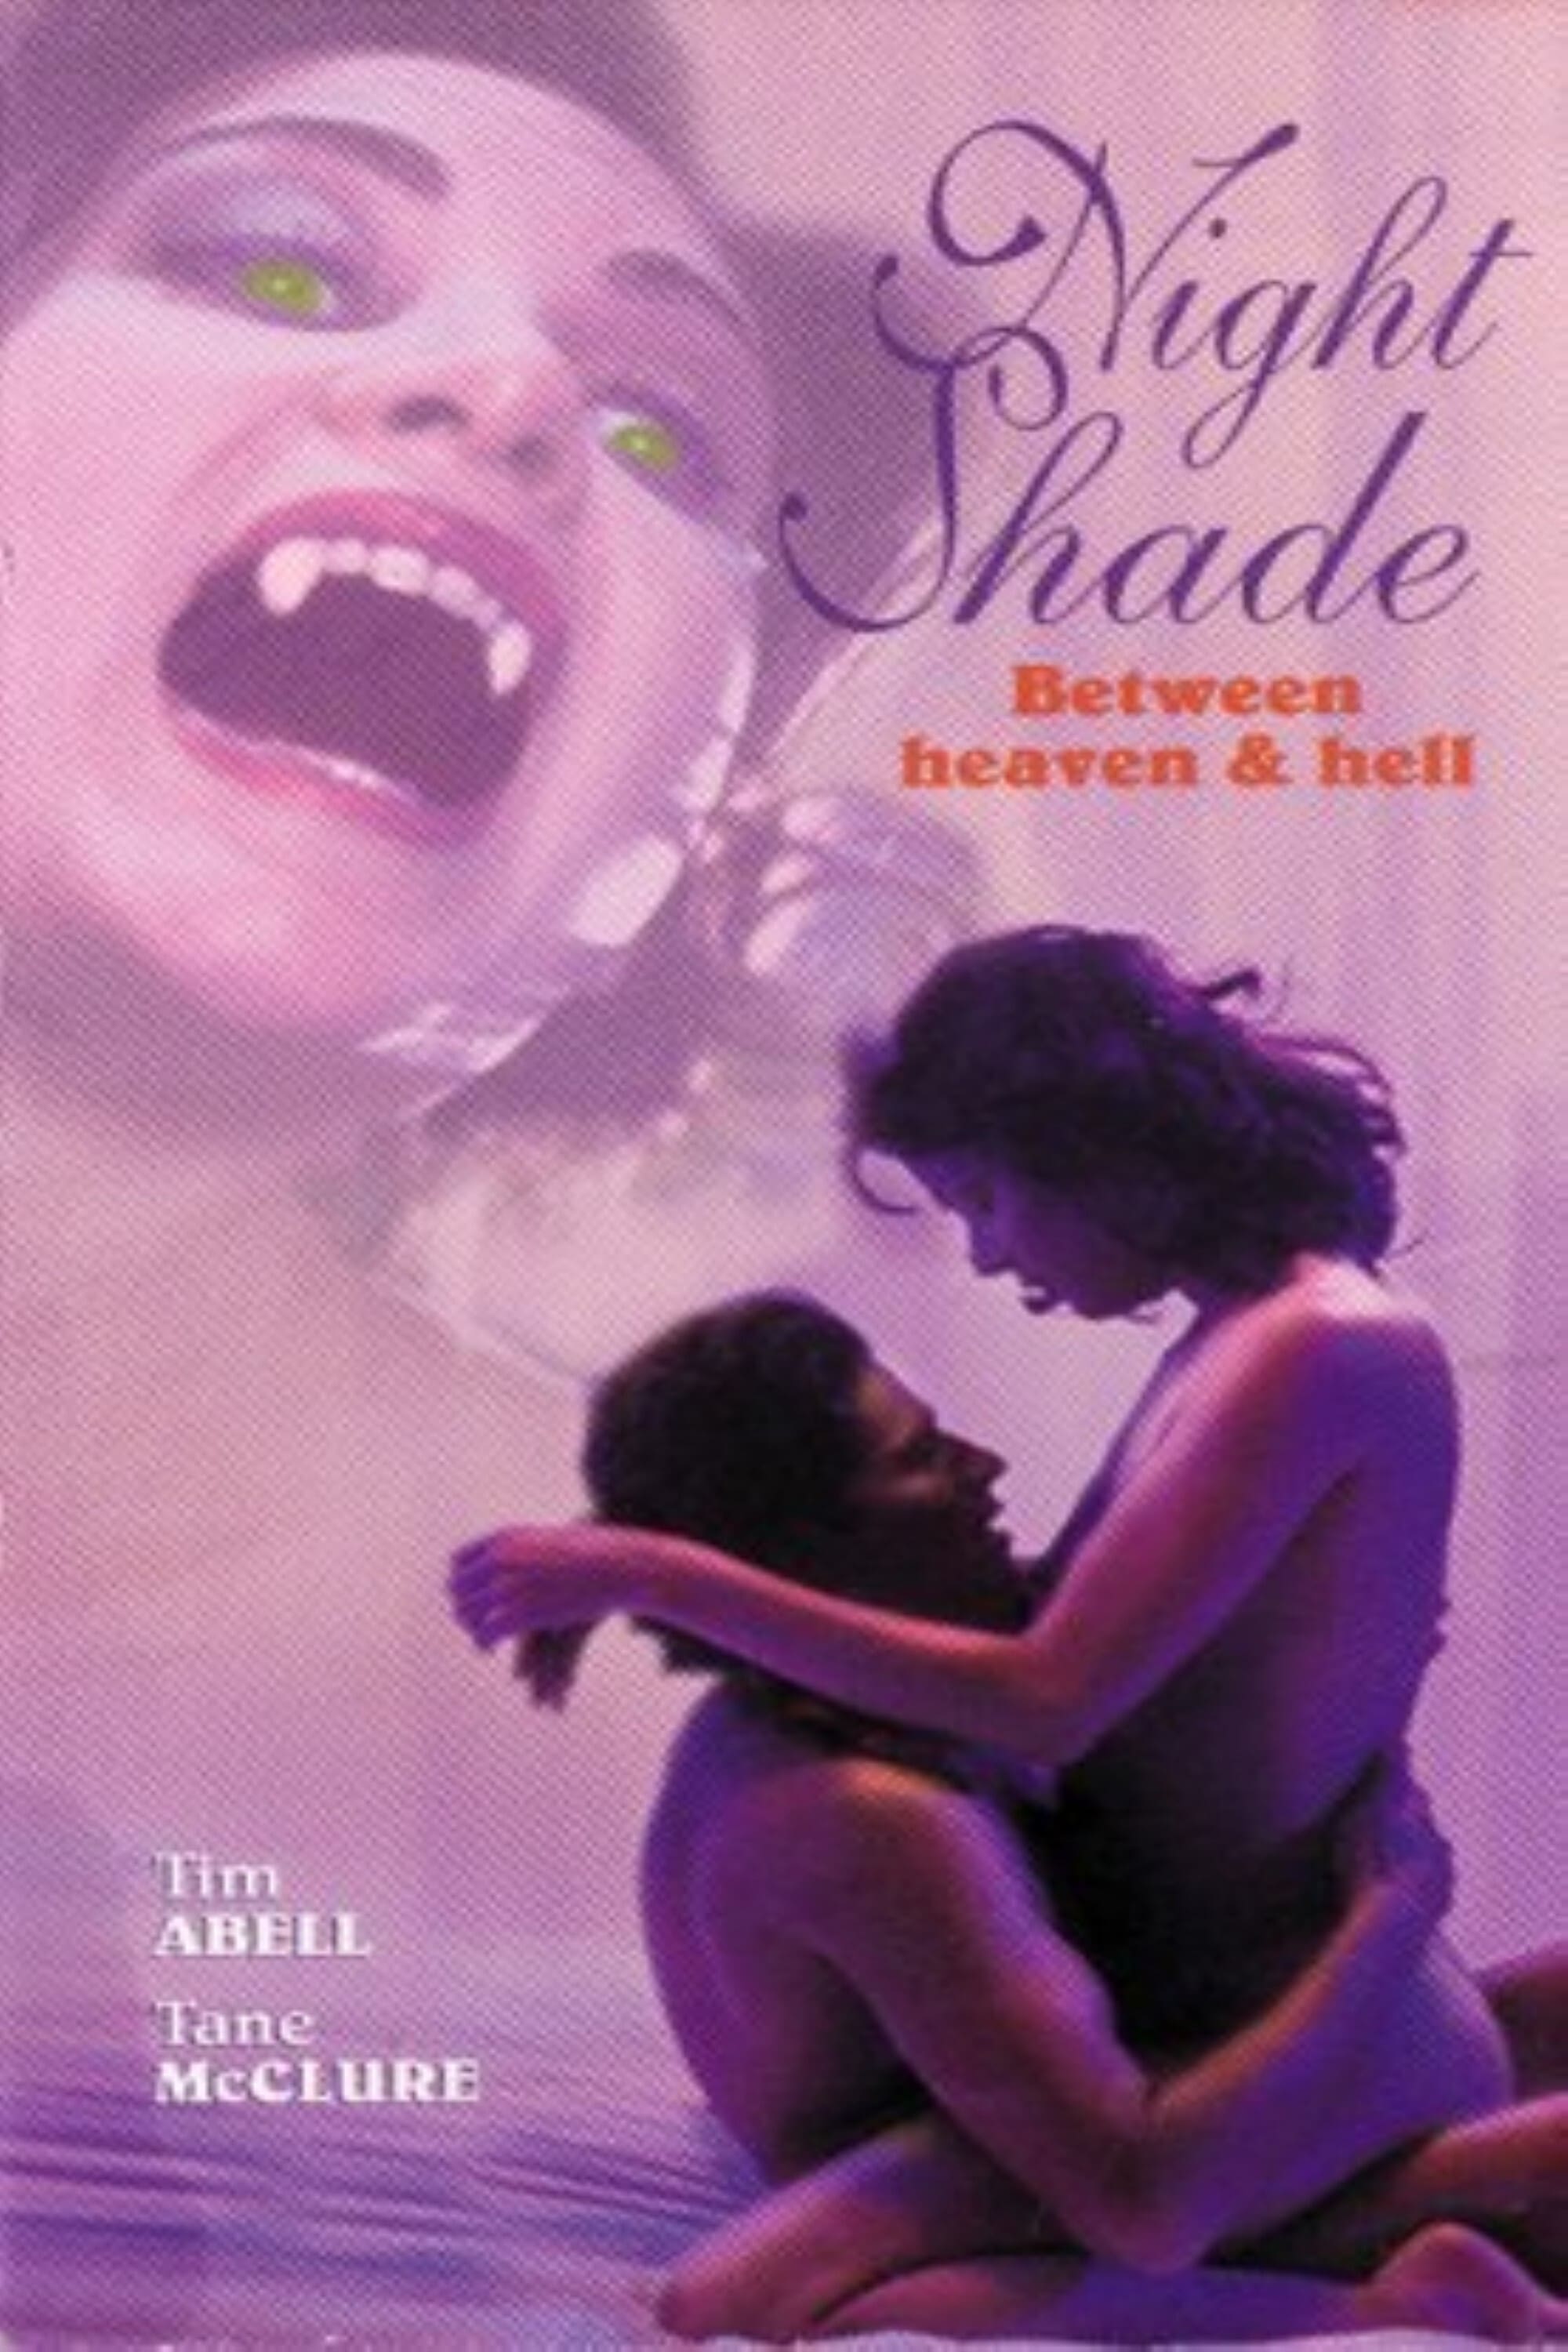 Night Shade (1996)